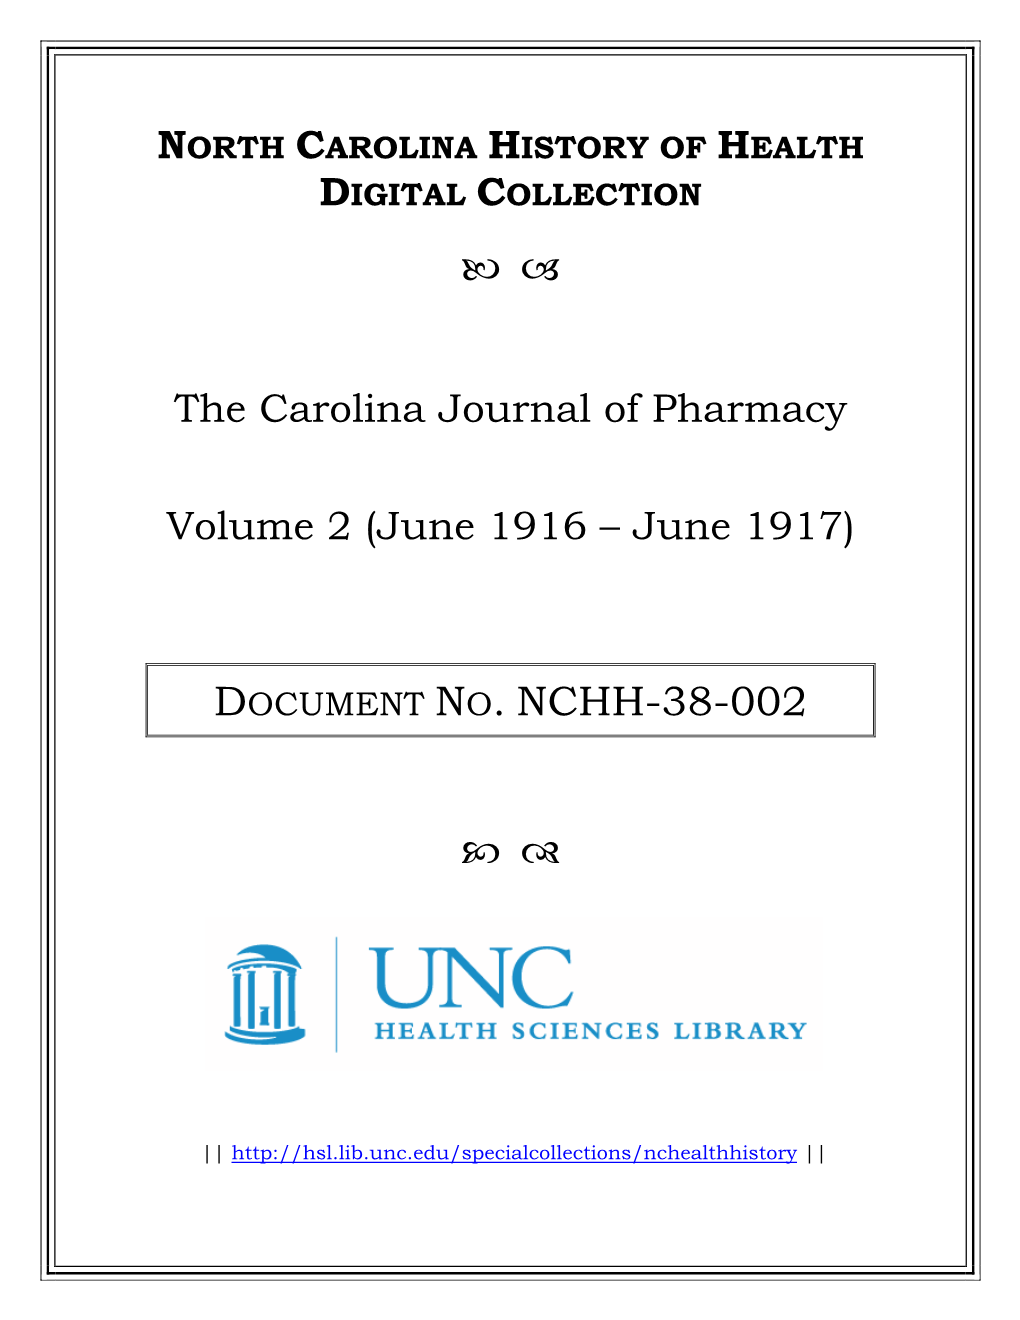 The Carolina Journal of Pharmacy [Vol. 2, 1916-1917]